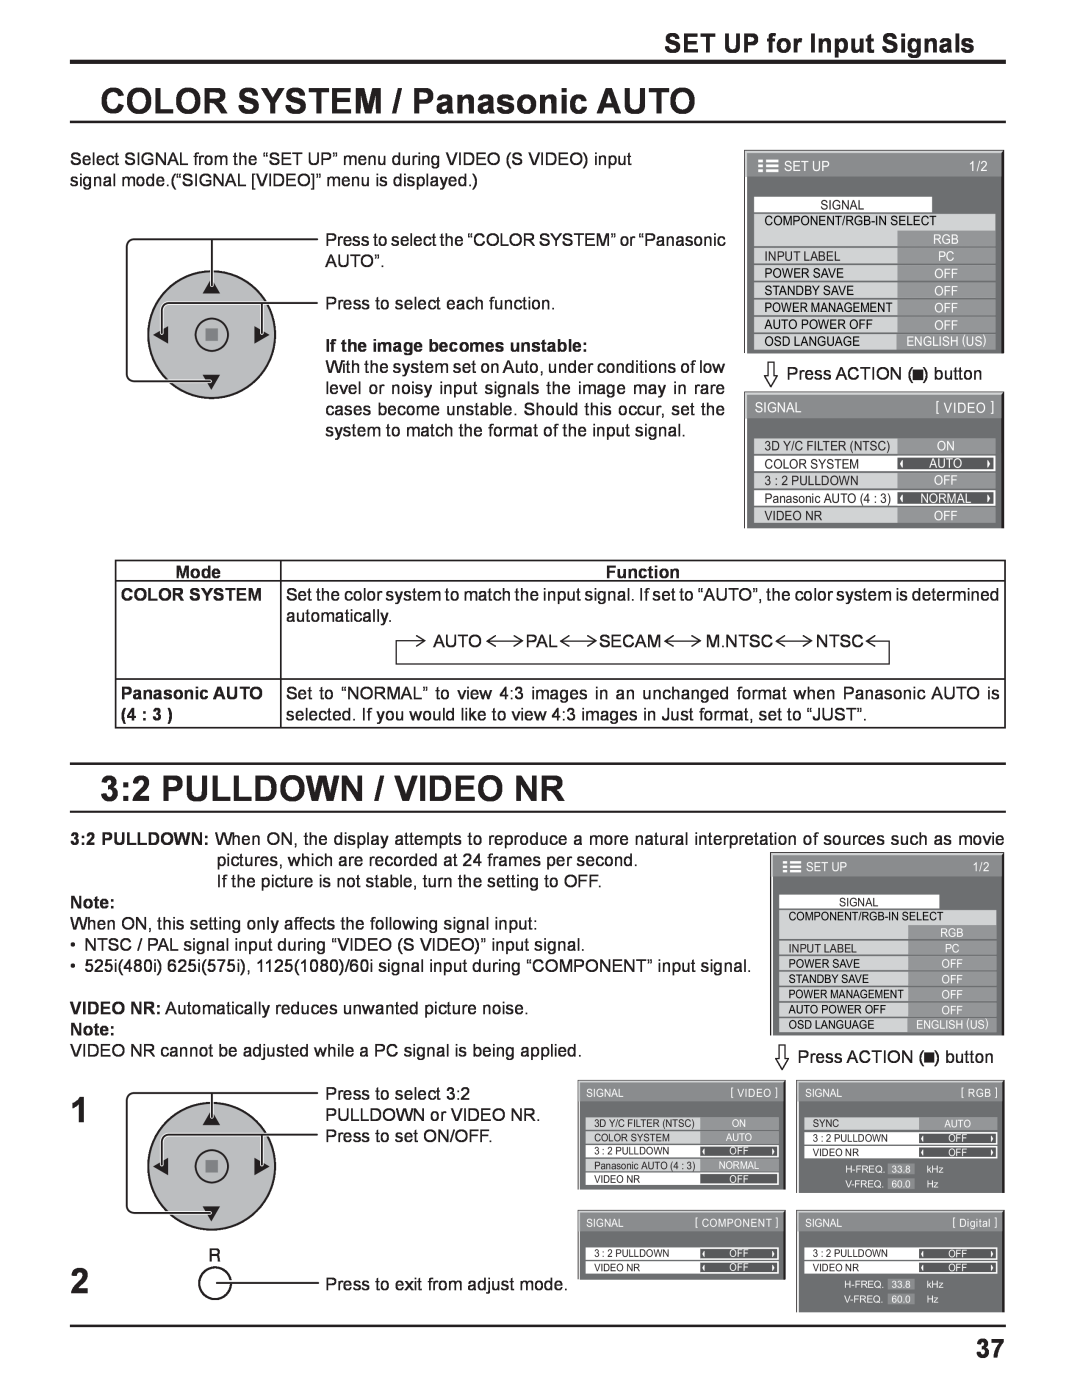 Panasonic TQBC2033 manual COLOR SYSTEM / Panasonic AUTO, Pulldown / Video Nr, SET UP for Input Signals 